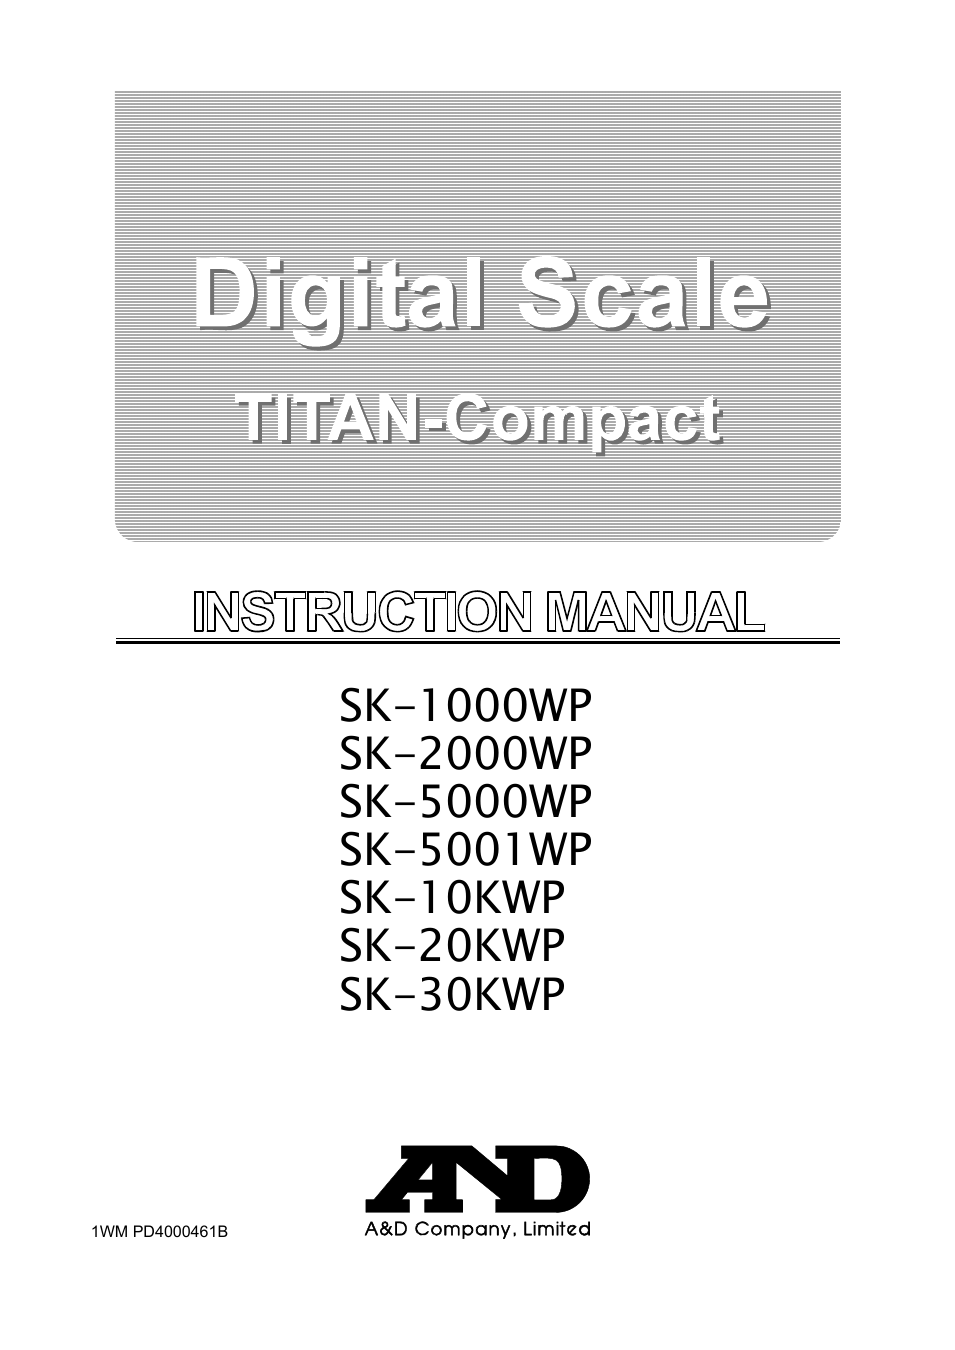 Digital Scale SK-10KWP